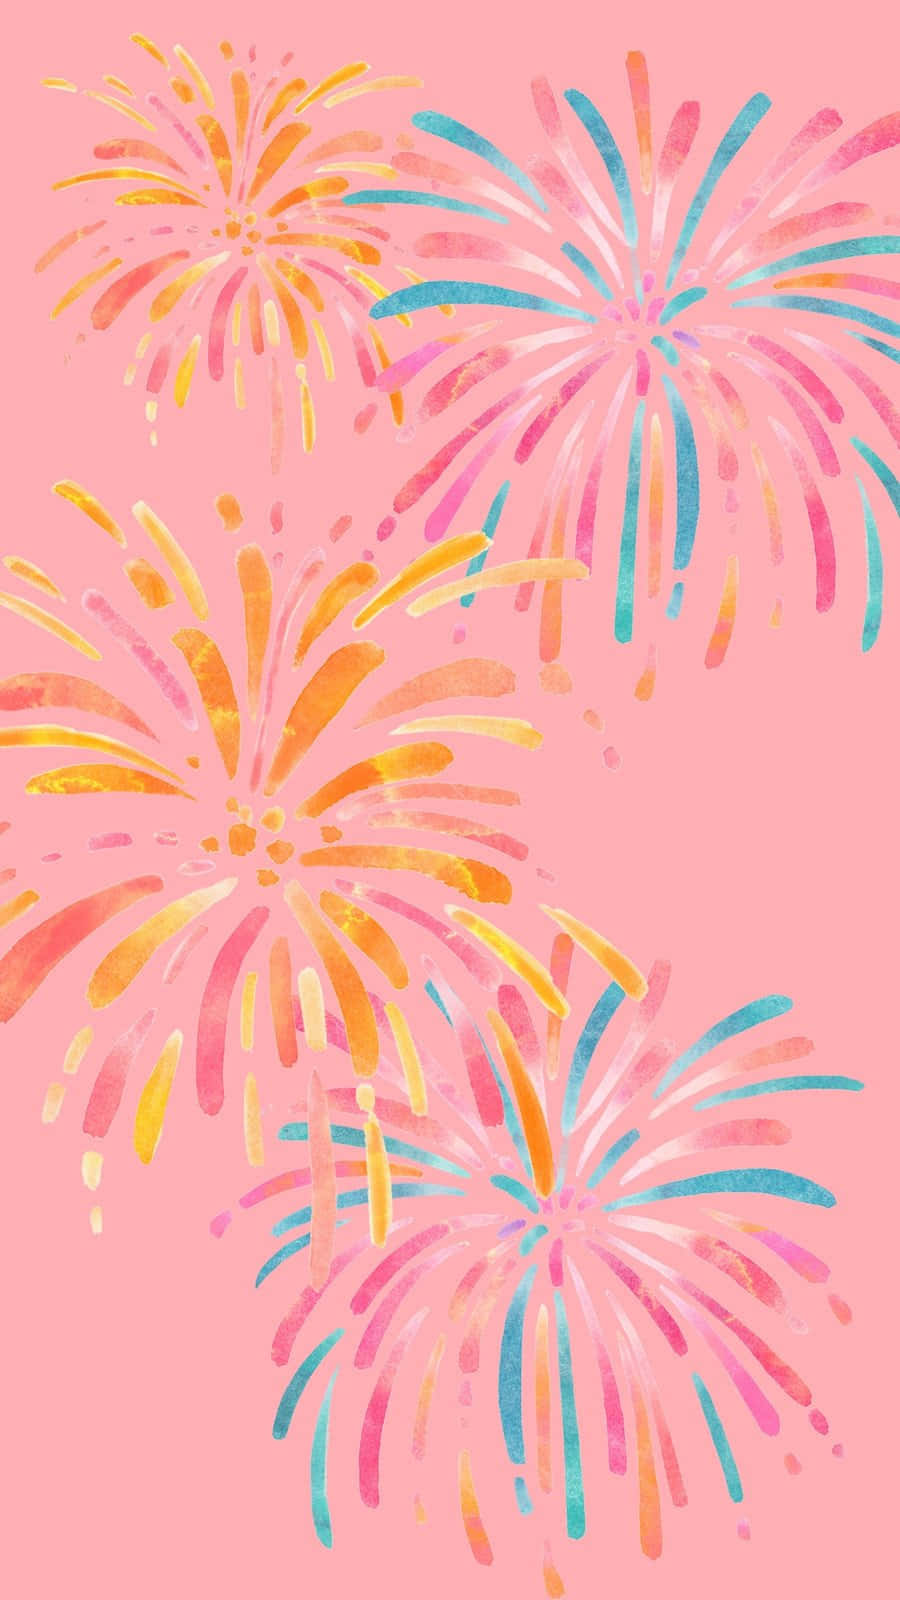 Pastel Color Fireworks Graphic Art Background